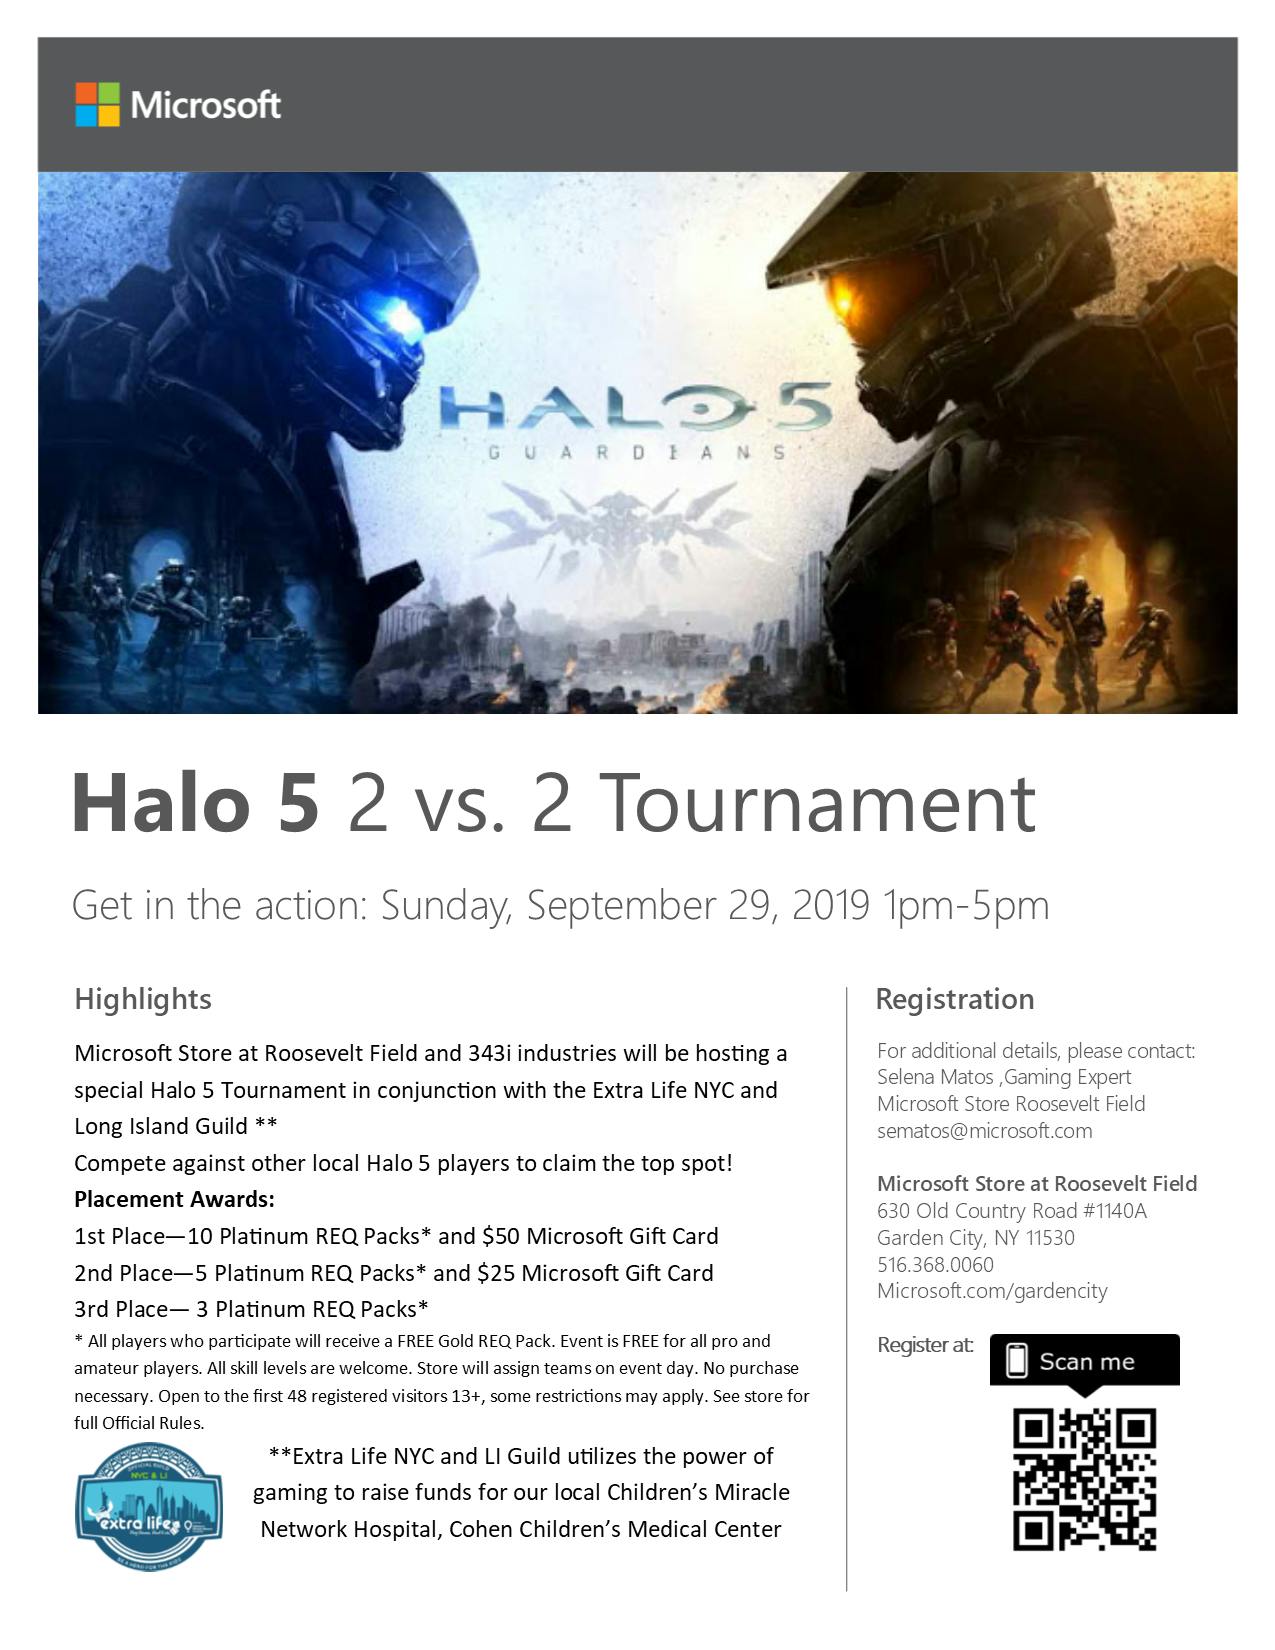 Free Halo 5 2 Vs 2 Tournament 29 Sep 2019